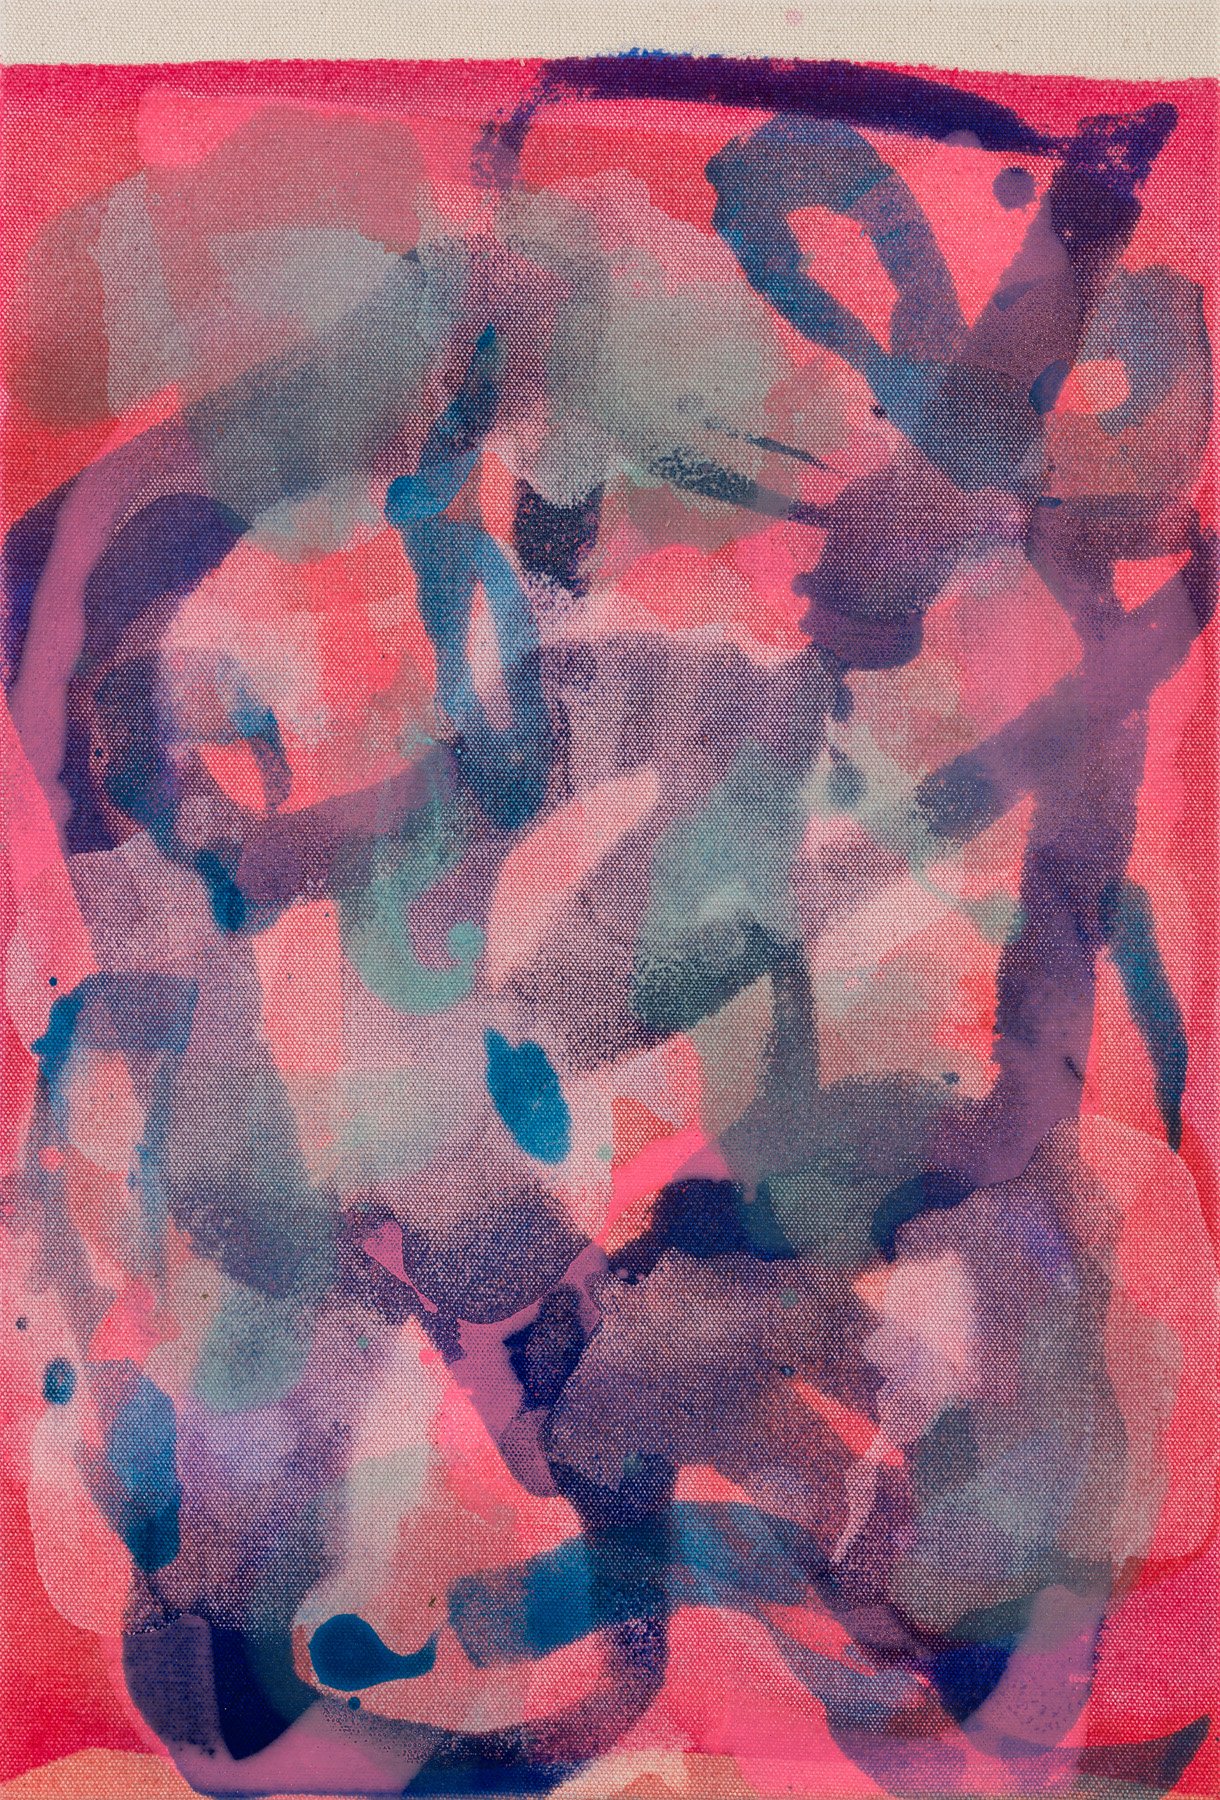  Distemper II (pink-red-blue)  2022  Distemper on canvas  45 x 30 cm  